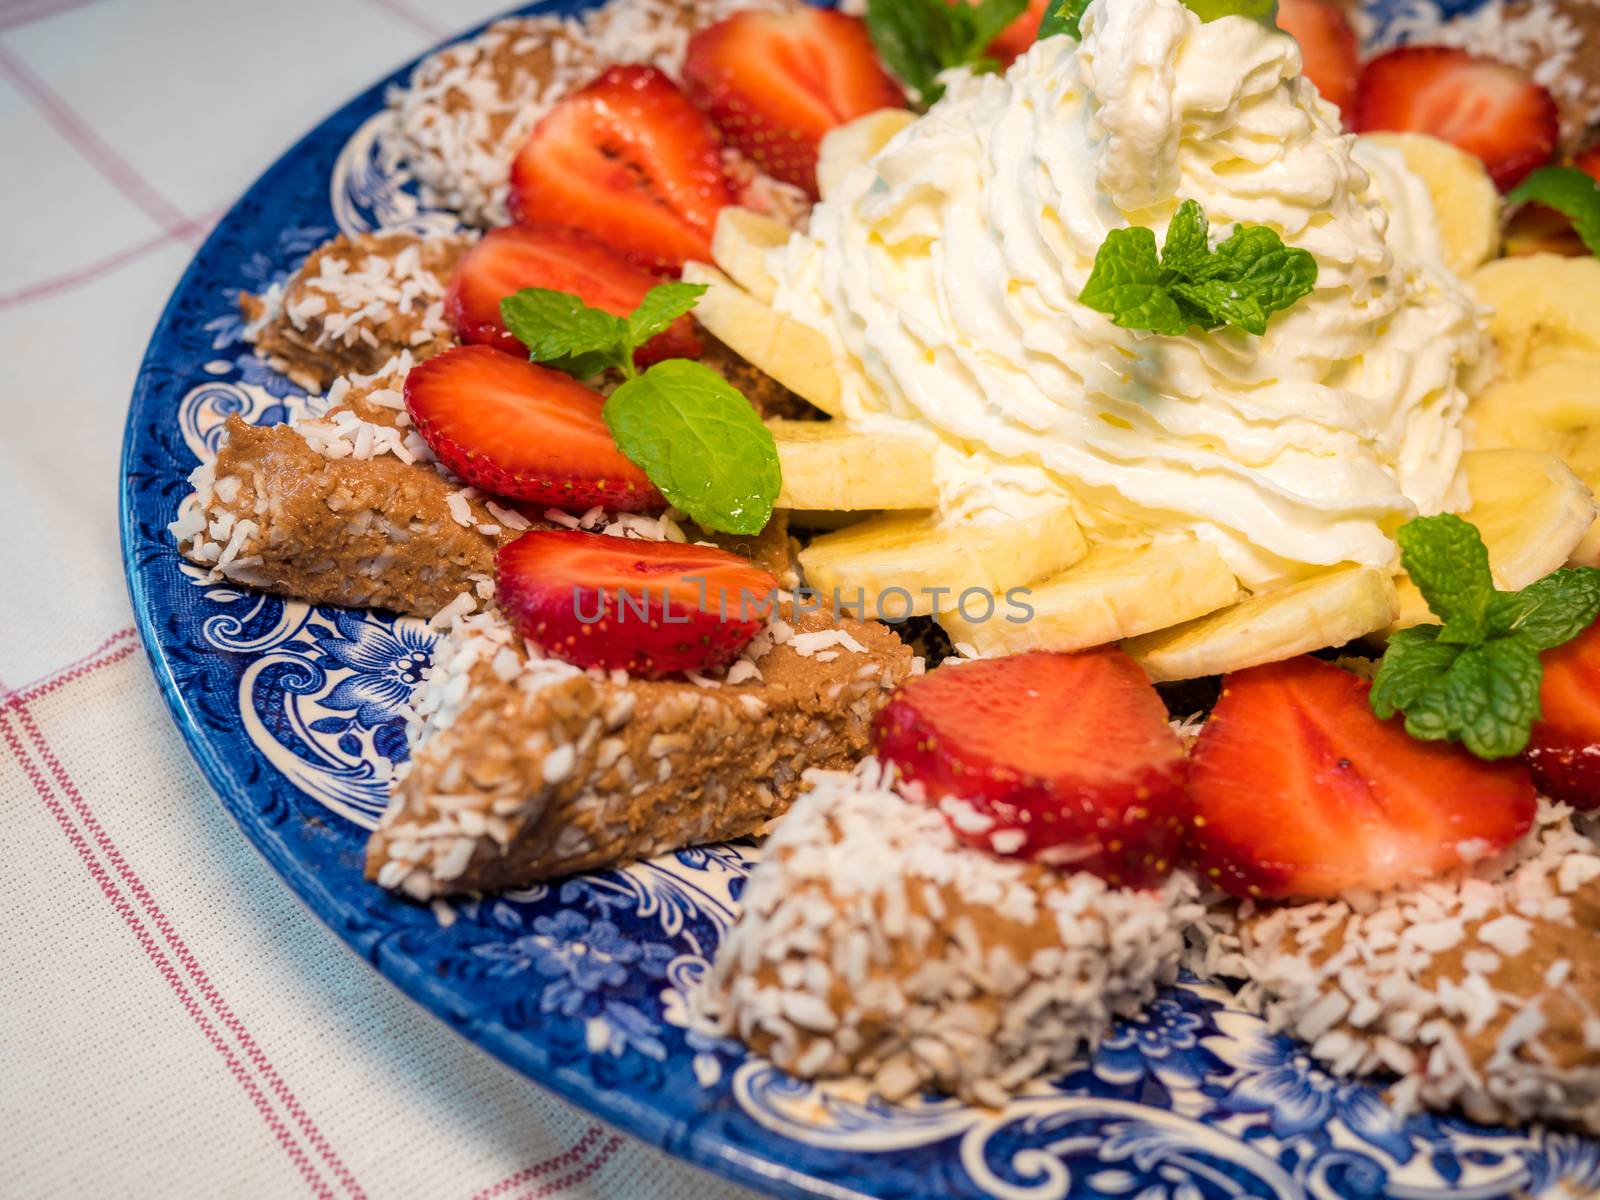 Chocolate dessert with banana and strawberry under whipped cream by dolfinvik